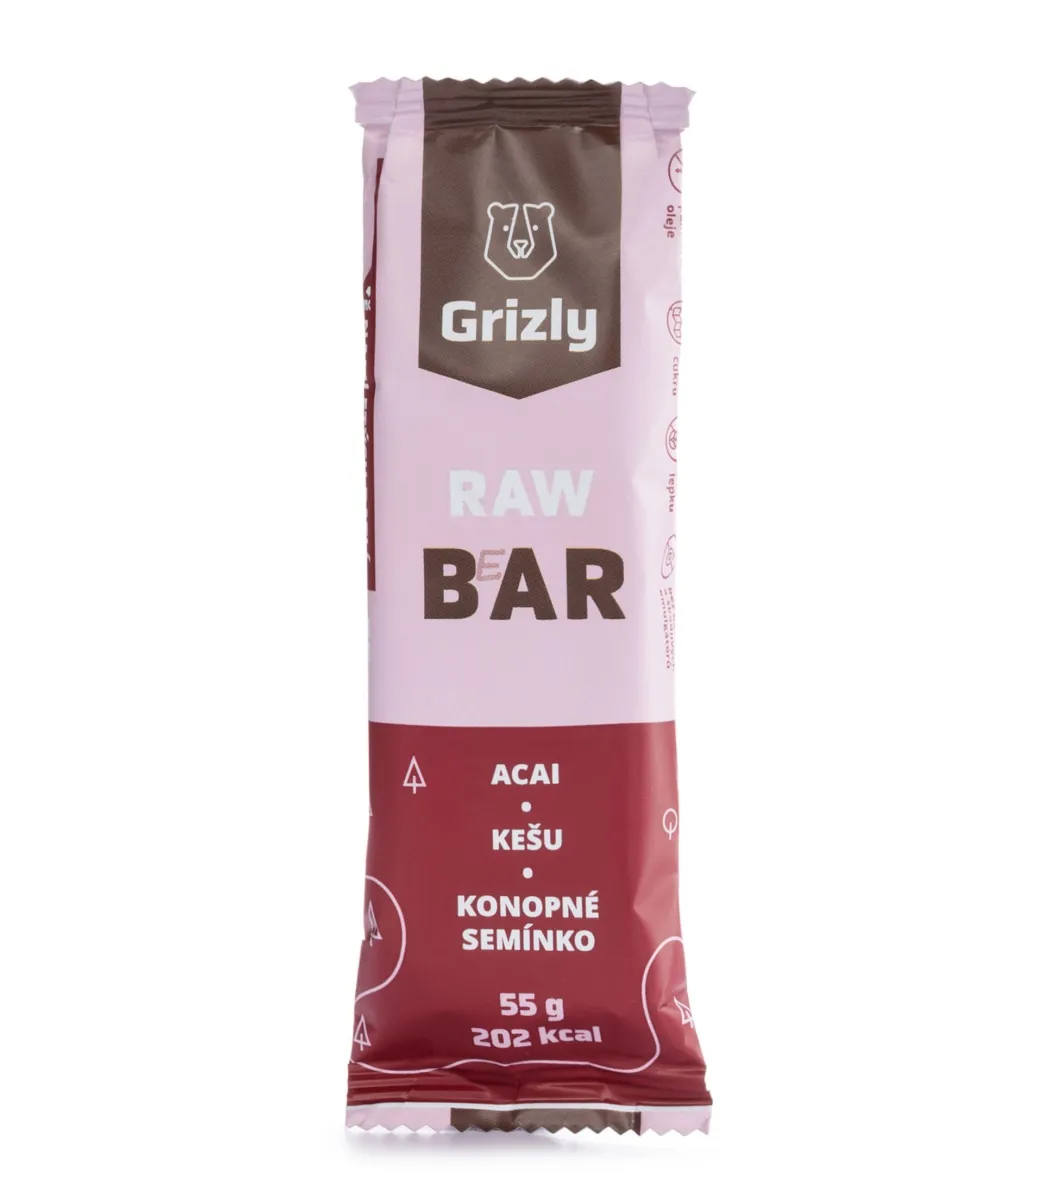 Grizly Raw Bar acai, kešu, konopné semínko tyčinka 55 g